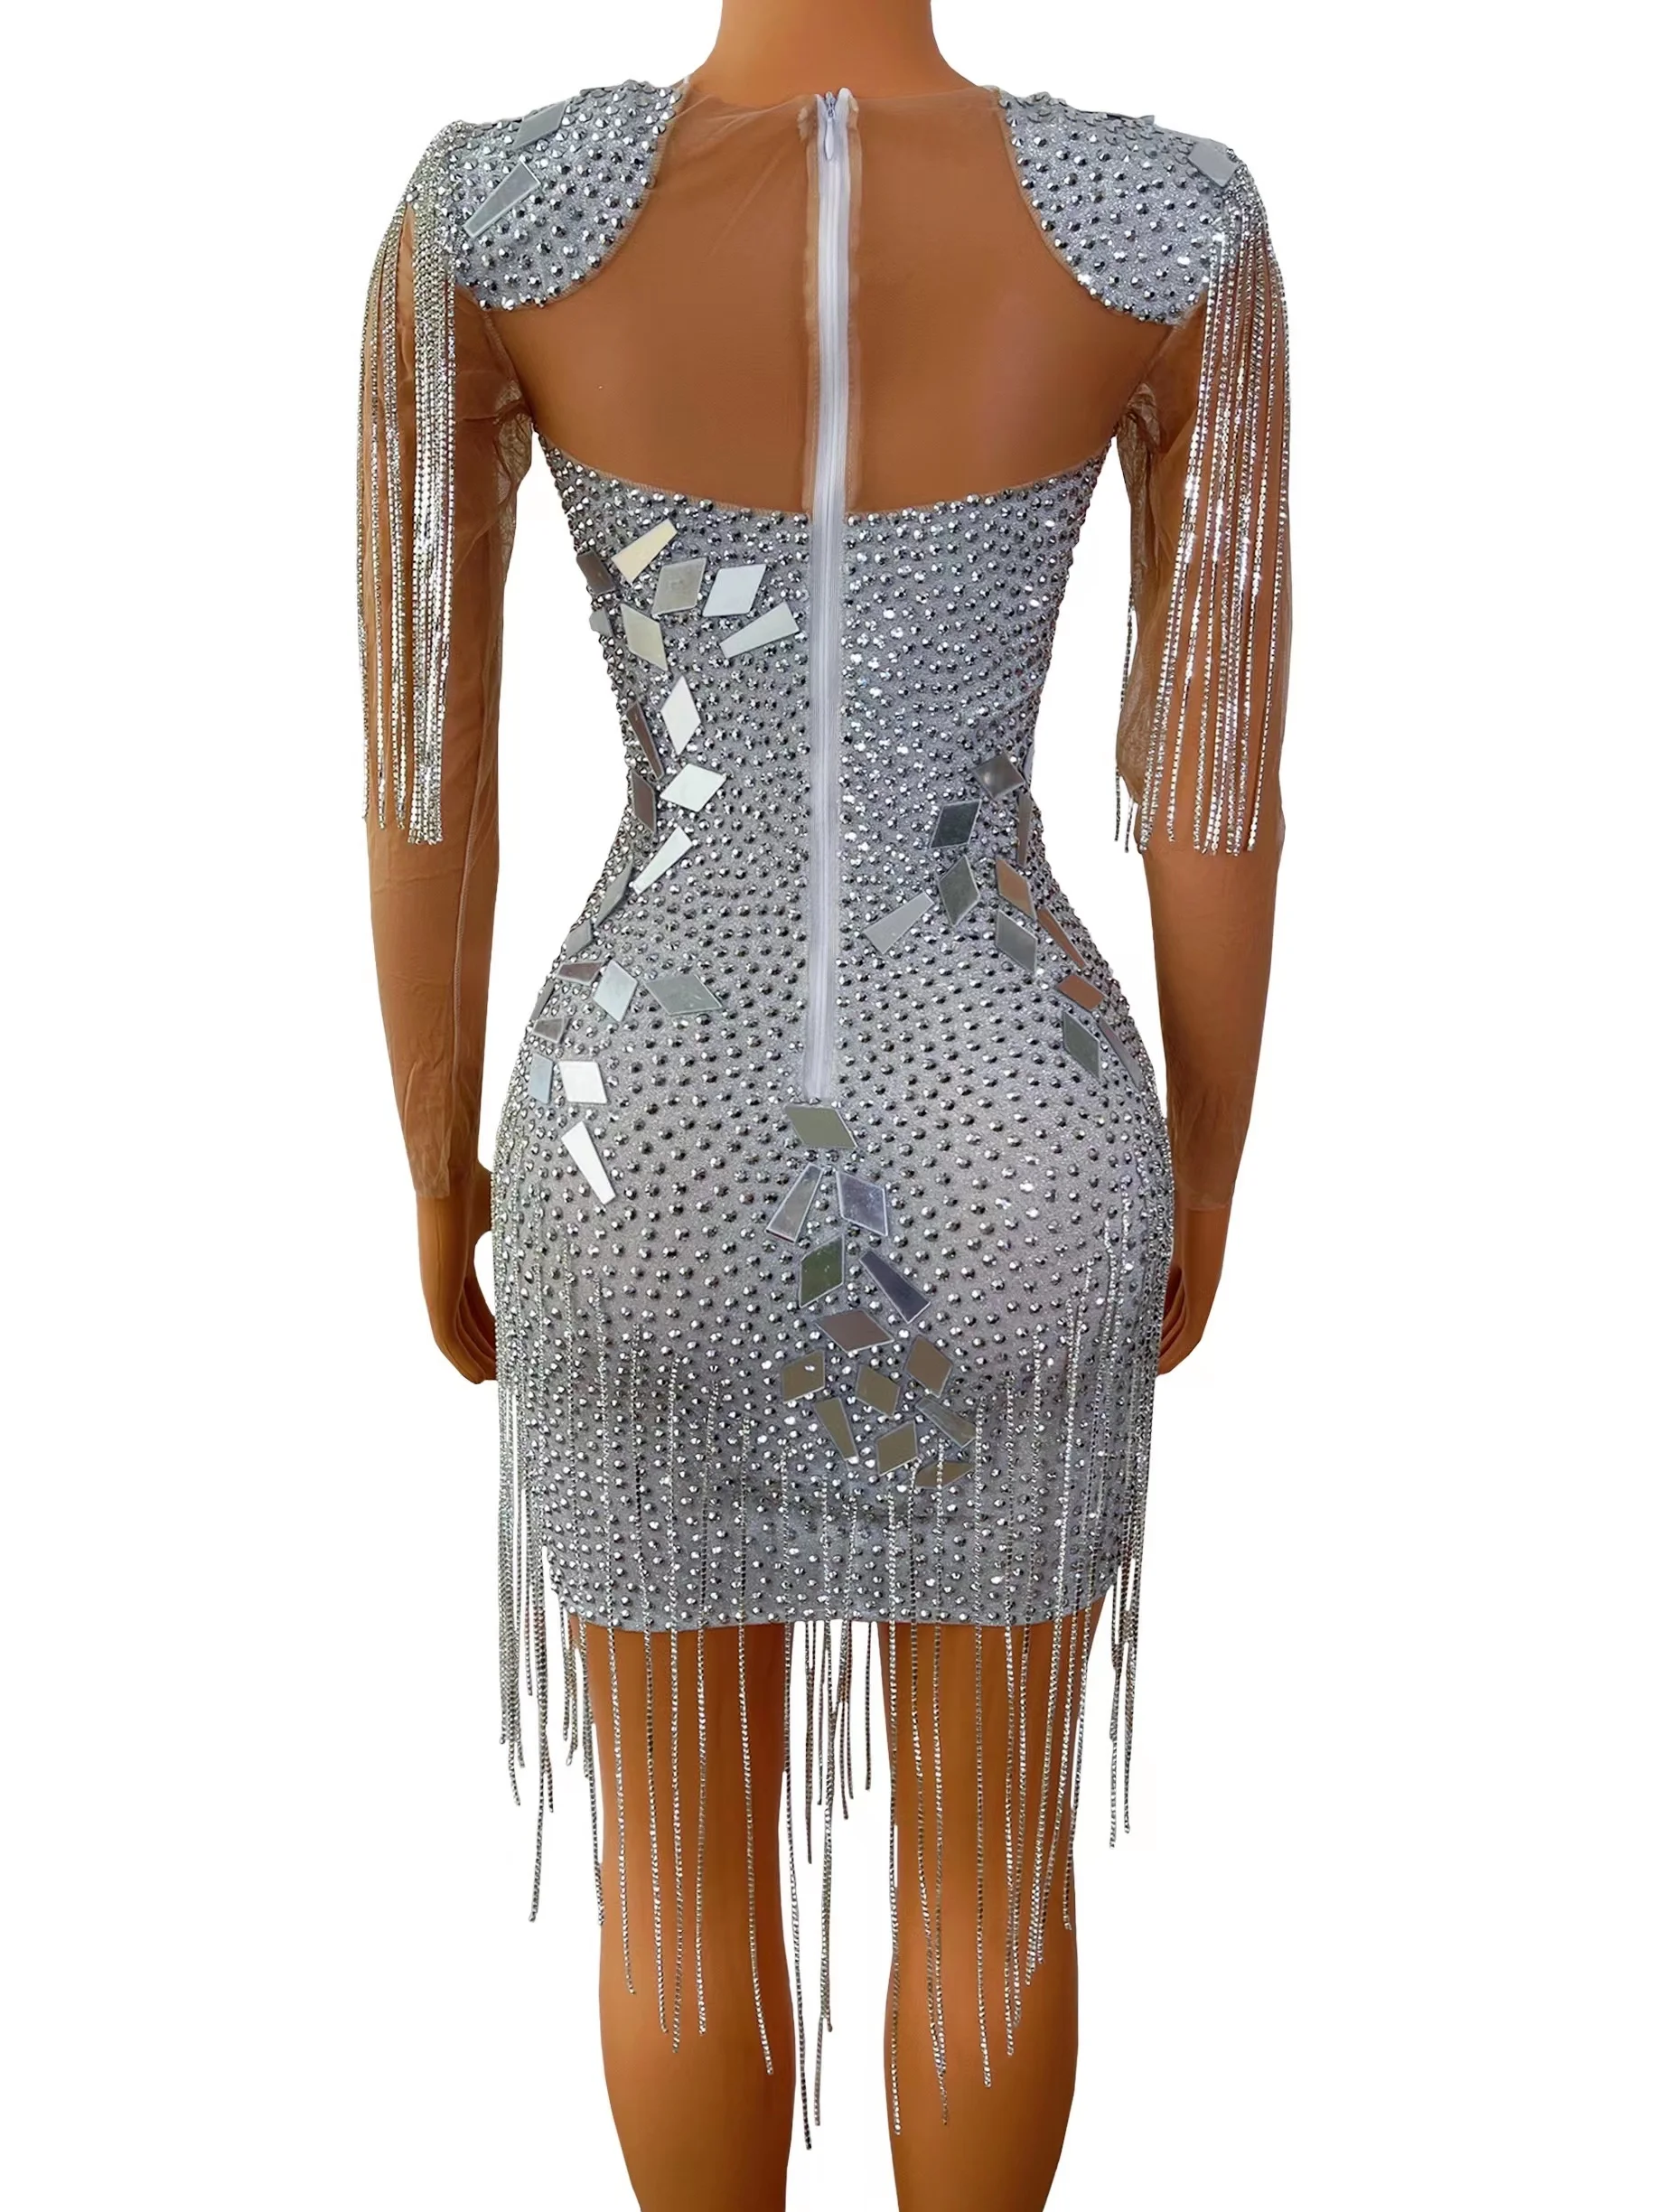 Novance Y2324 Dresses Women Clothing Shiny Crystal Fringe Sequined Sexy ...